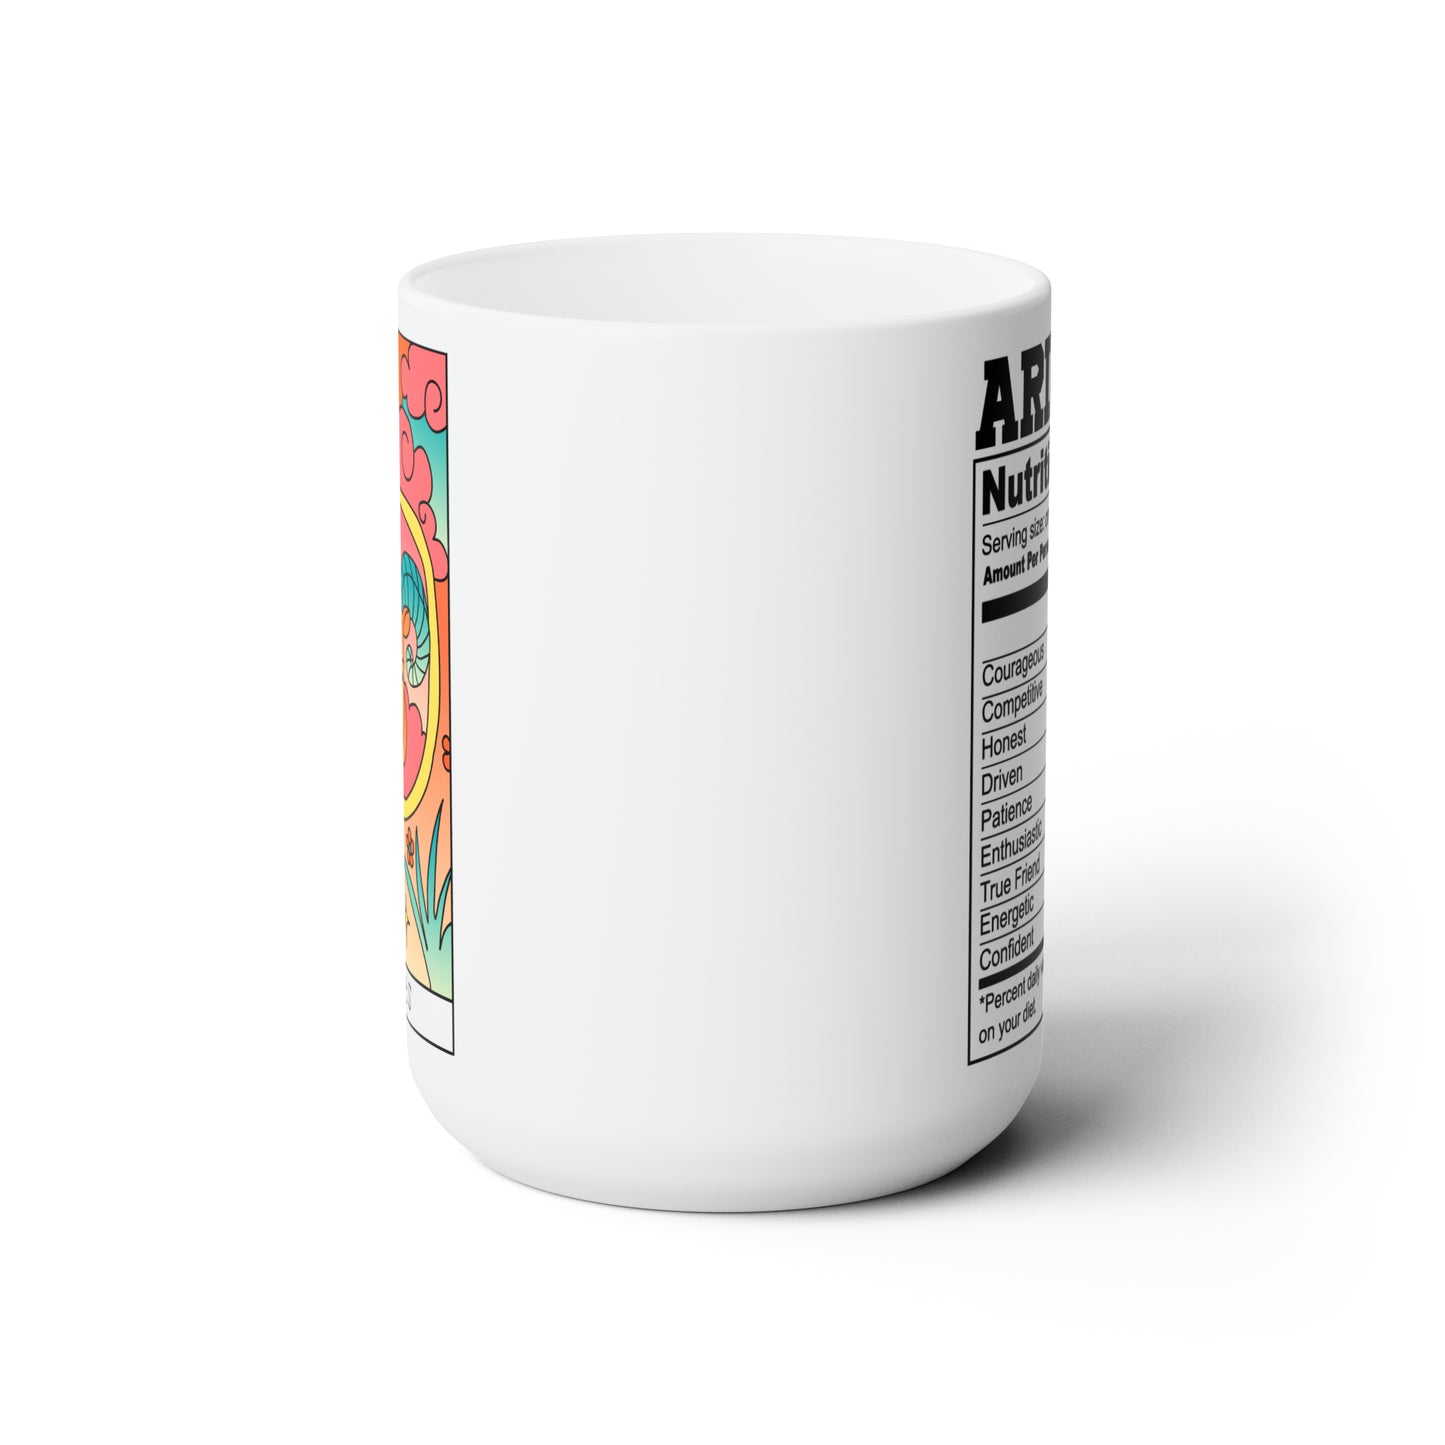 Aries Tarot Card Coffee Mug - Double Sided White Ceramic 15oz - by TheGlassyLass.com